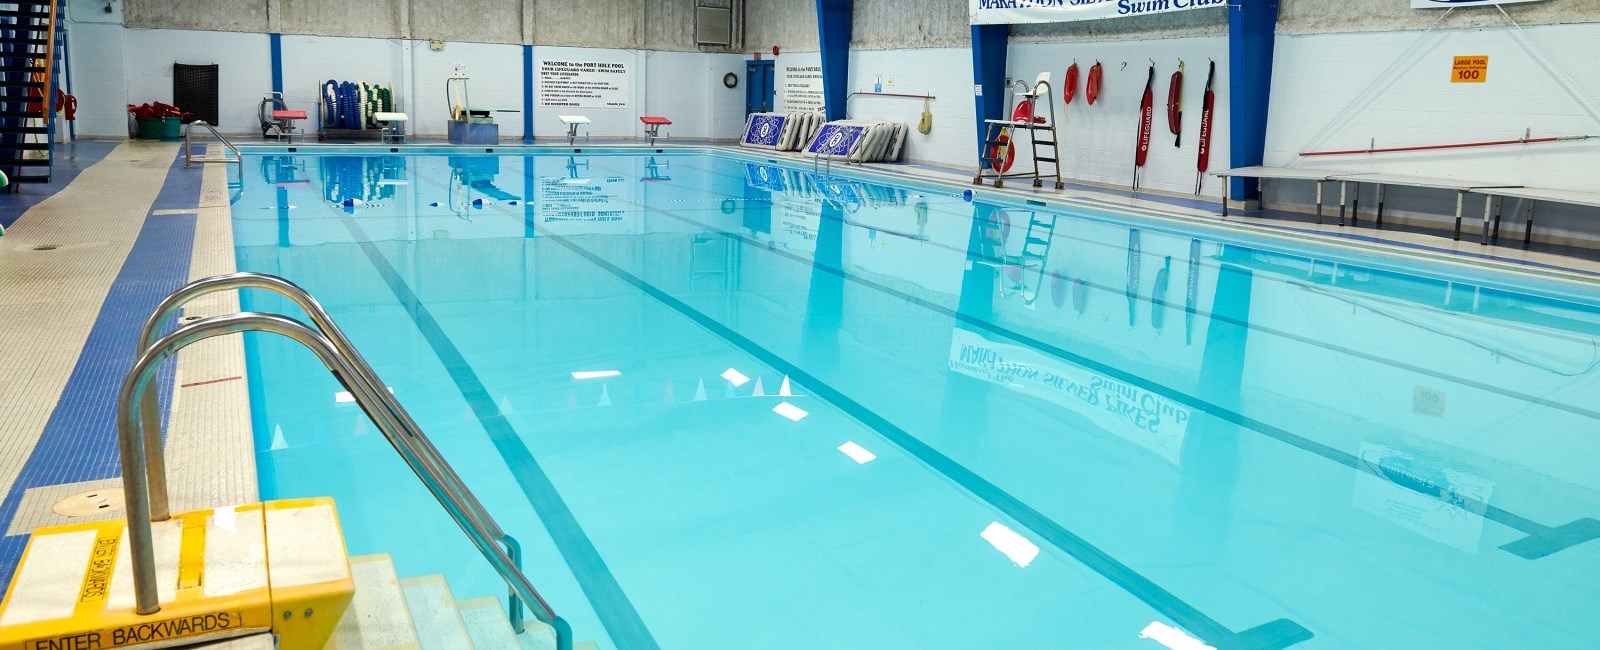 empty indoor swimming pool